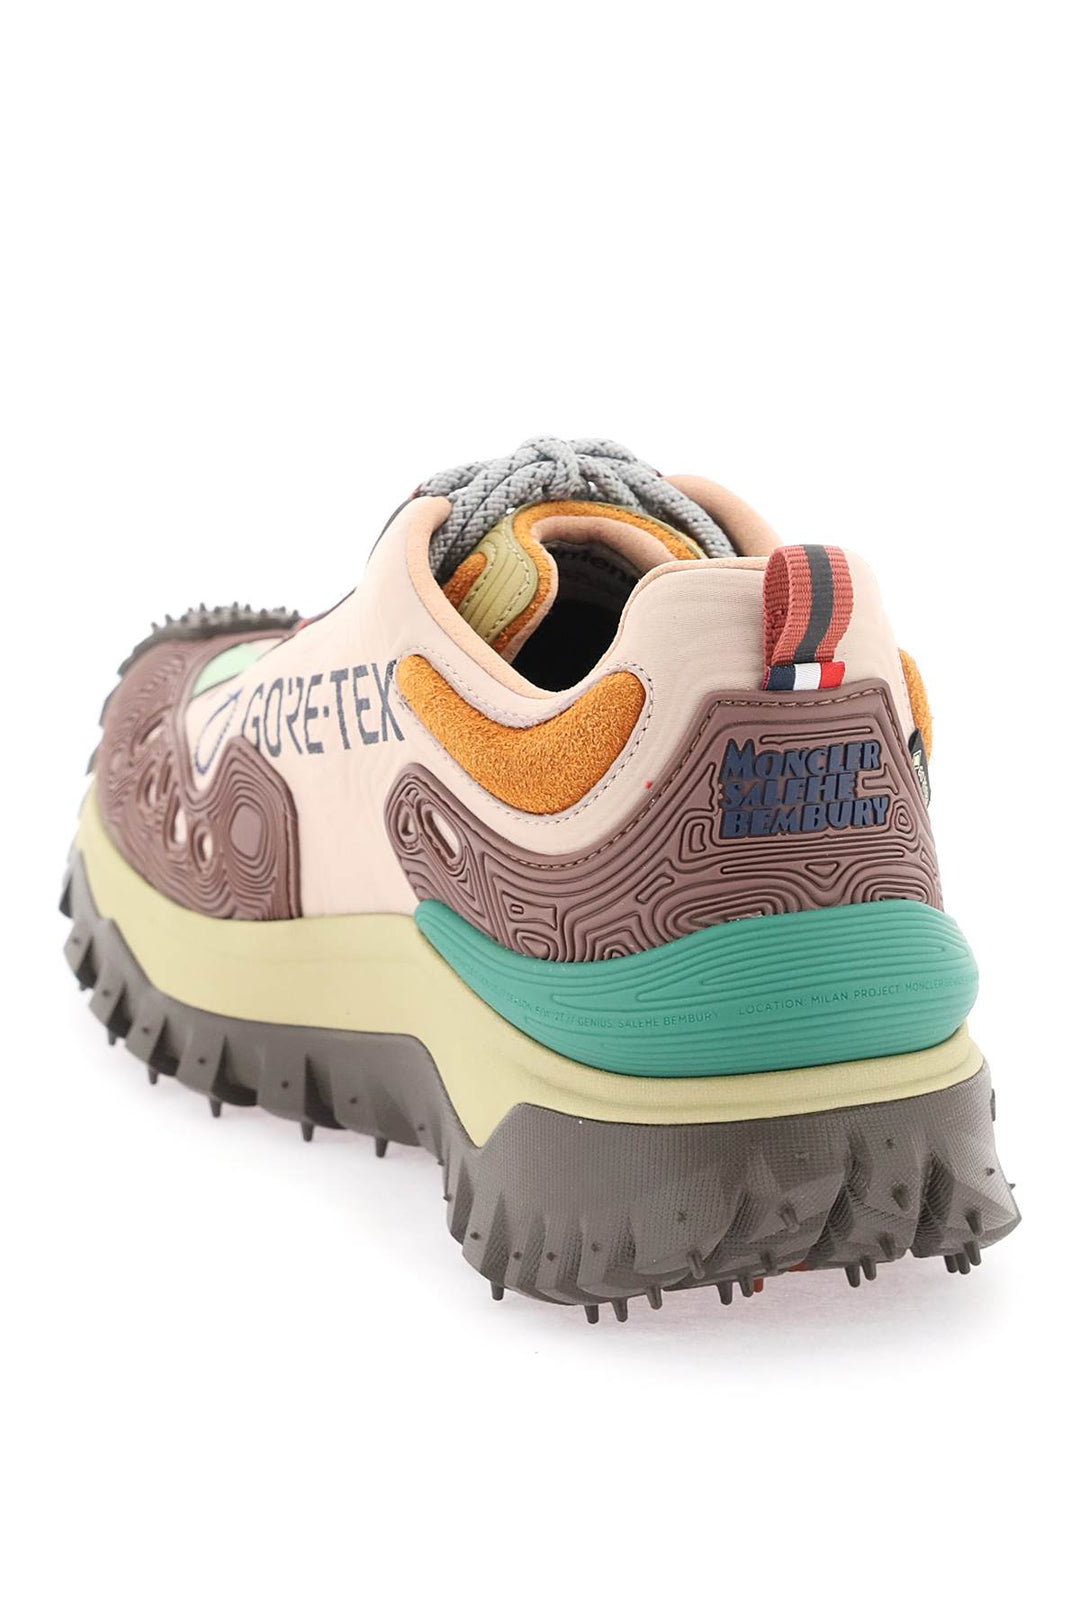 Moncler X Salehe Bembury Trailgrip Grain Sneakers By Salehe Bembury   Multicolor